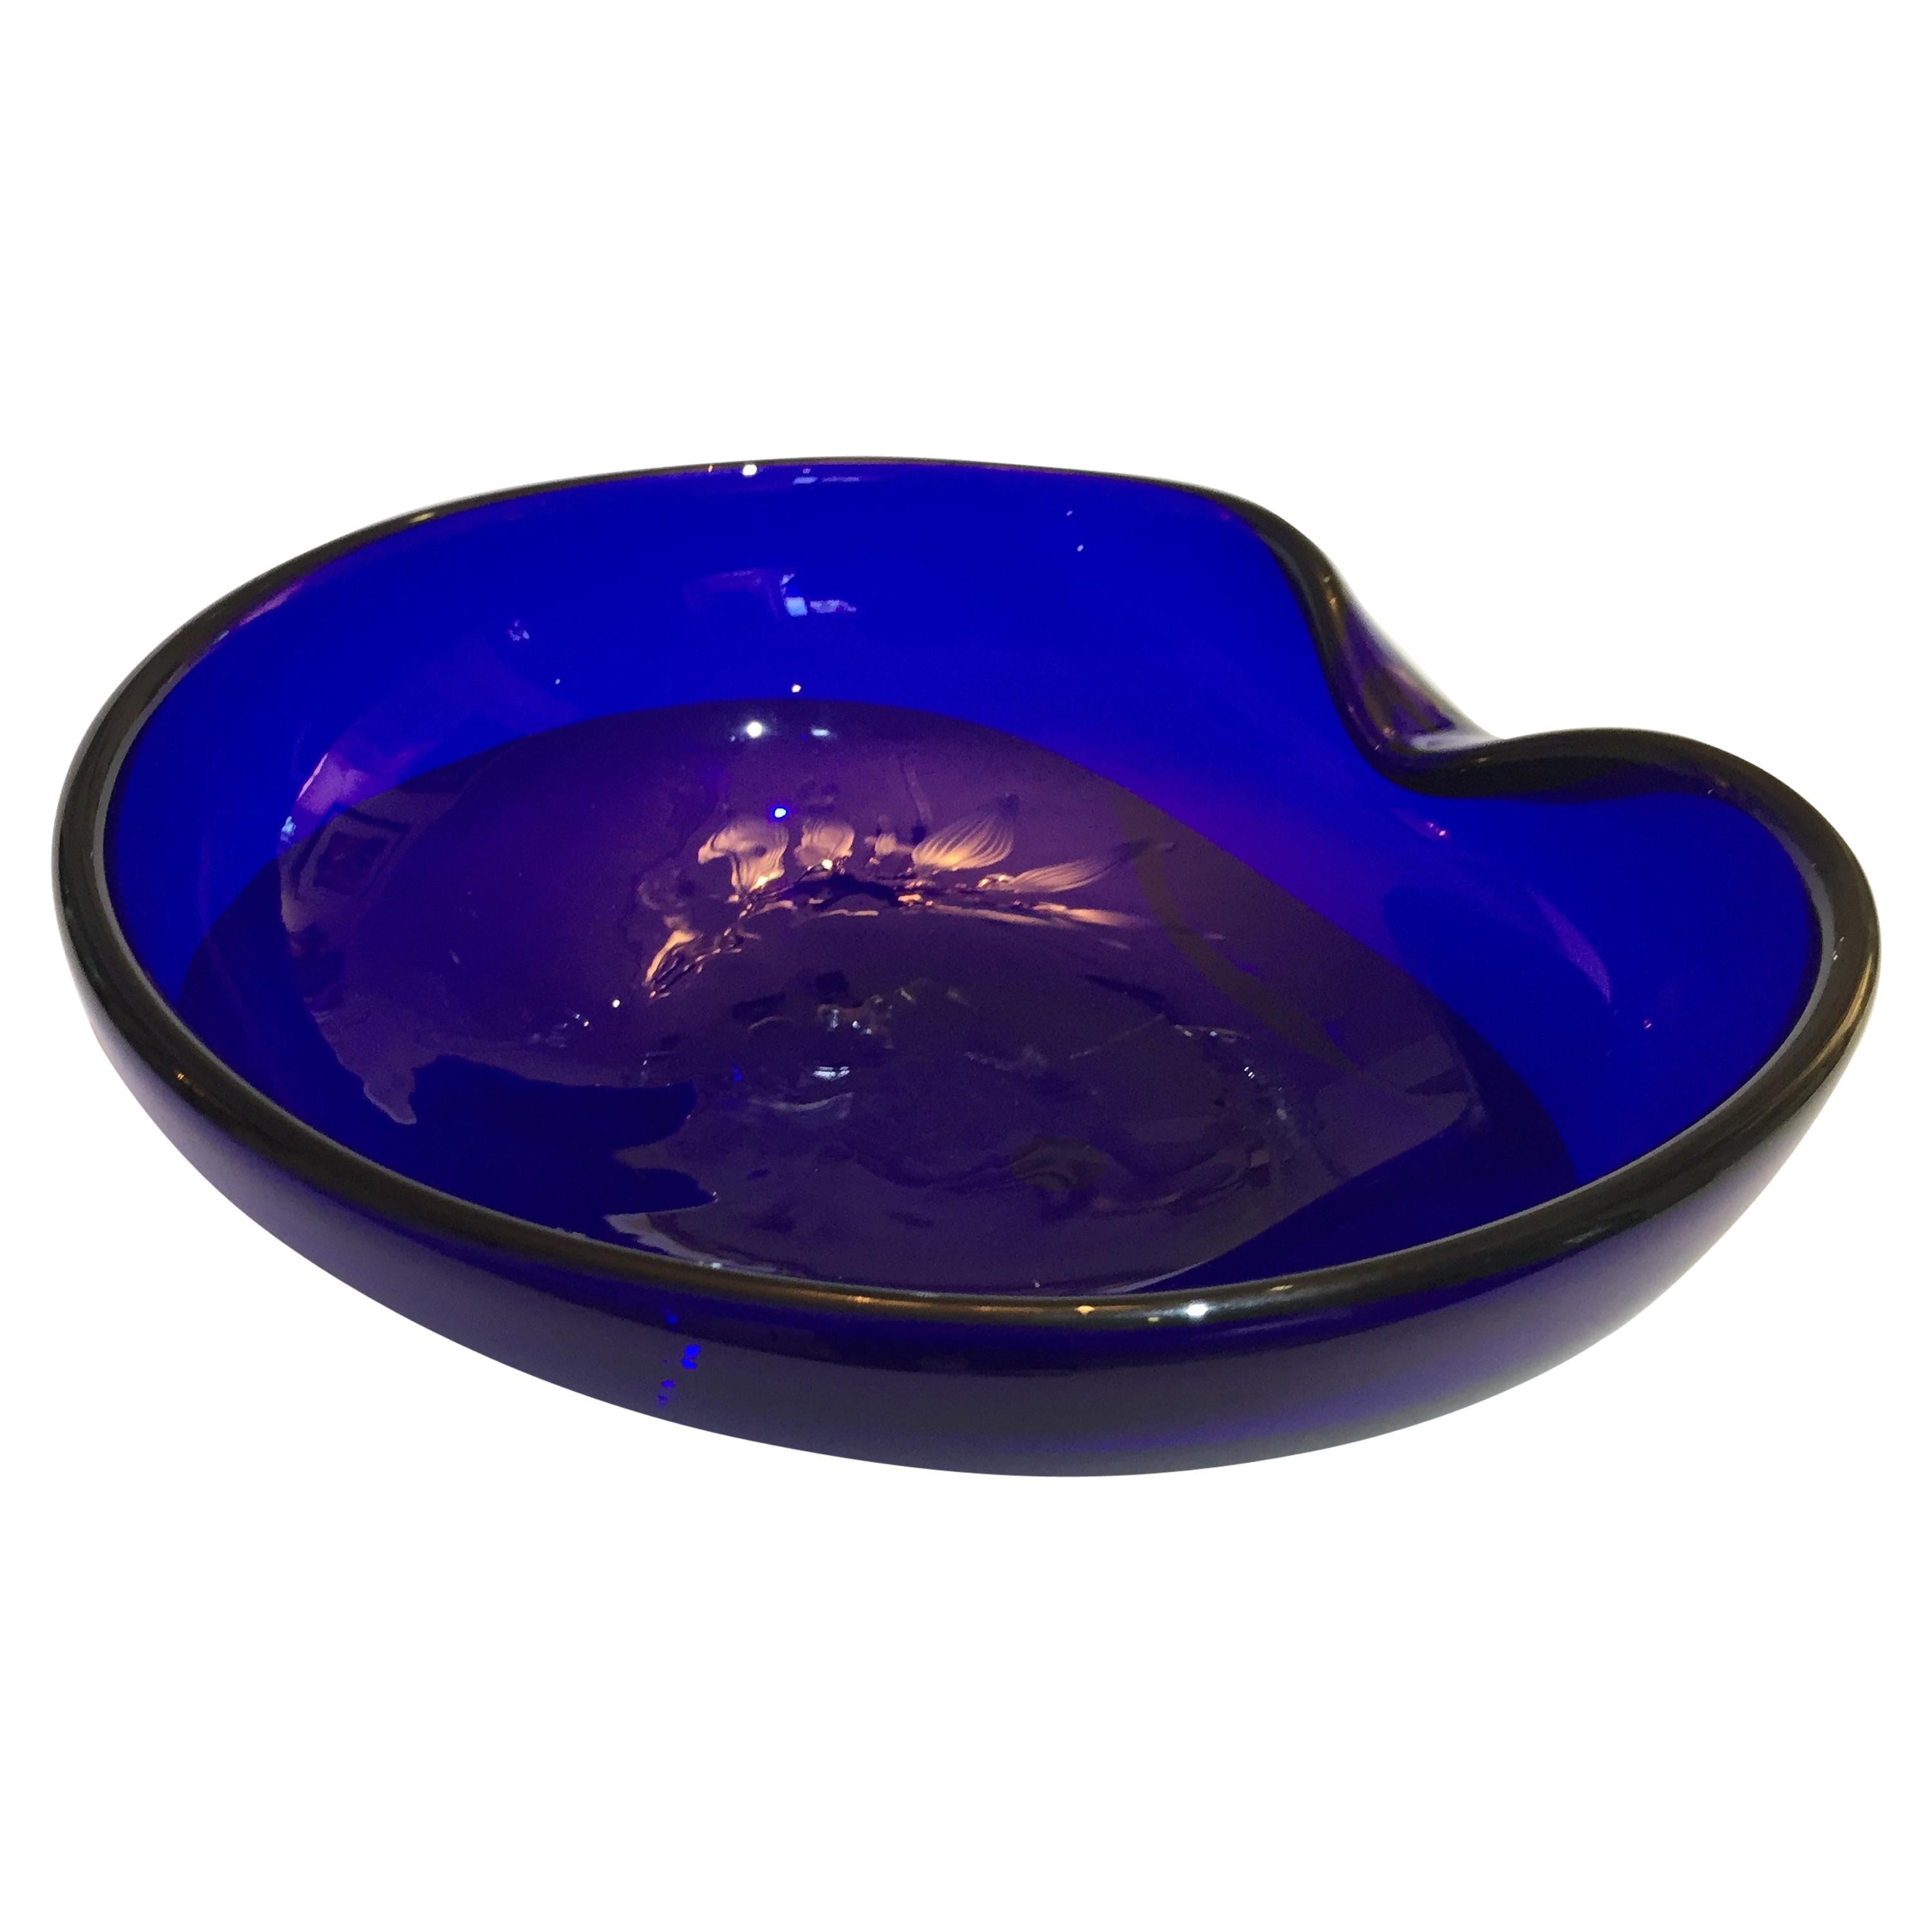 Elsa Peretti Thumbprint Bowl Dish for Tiffany & Co. Cobalt Blue Glass